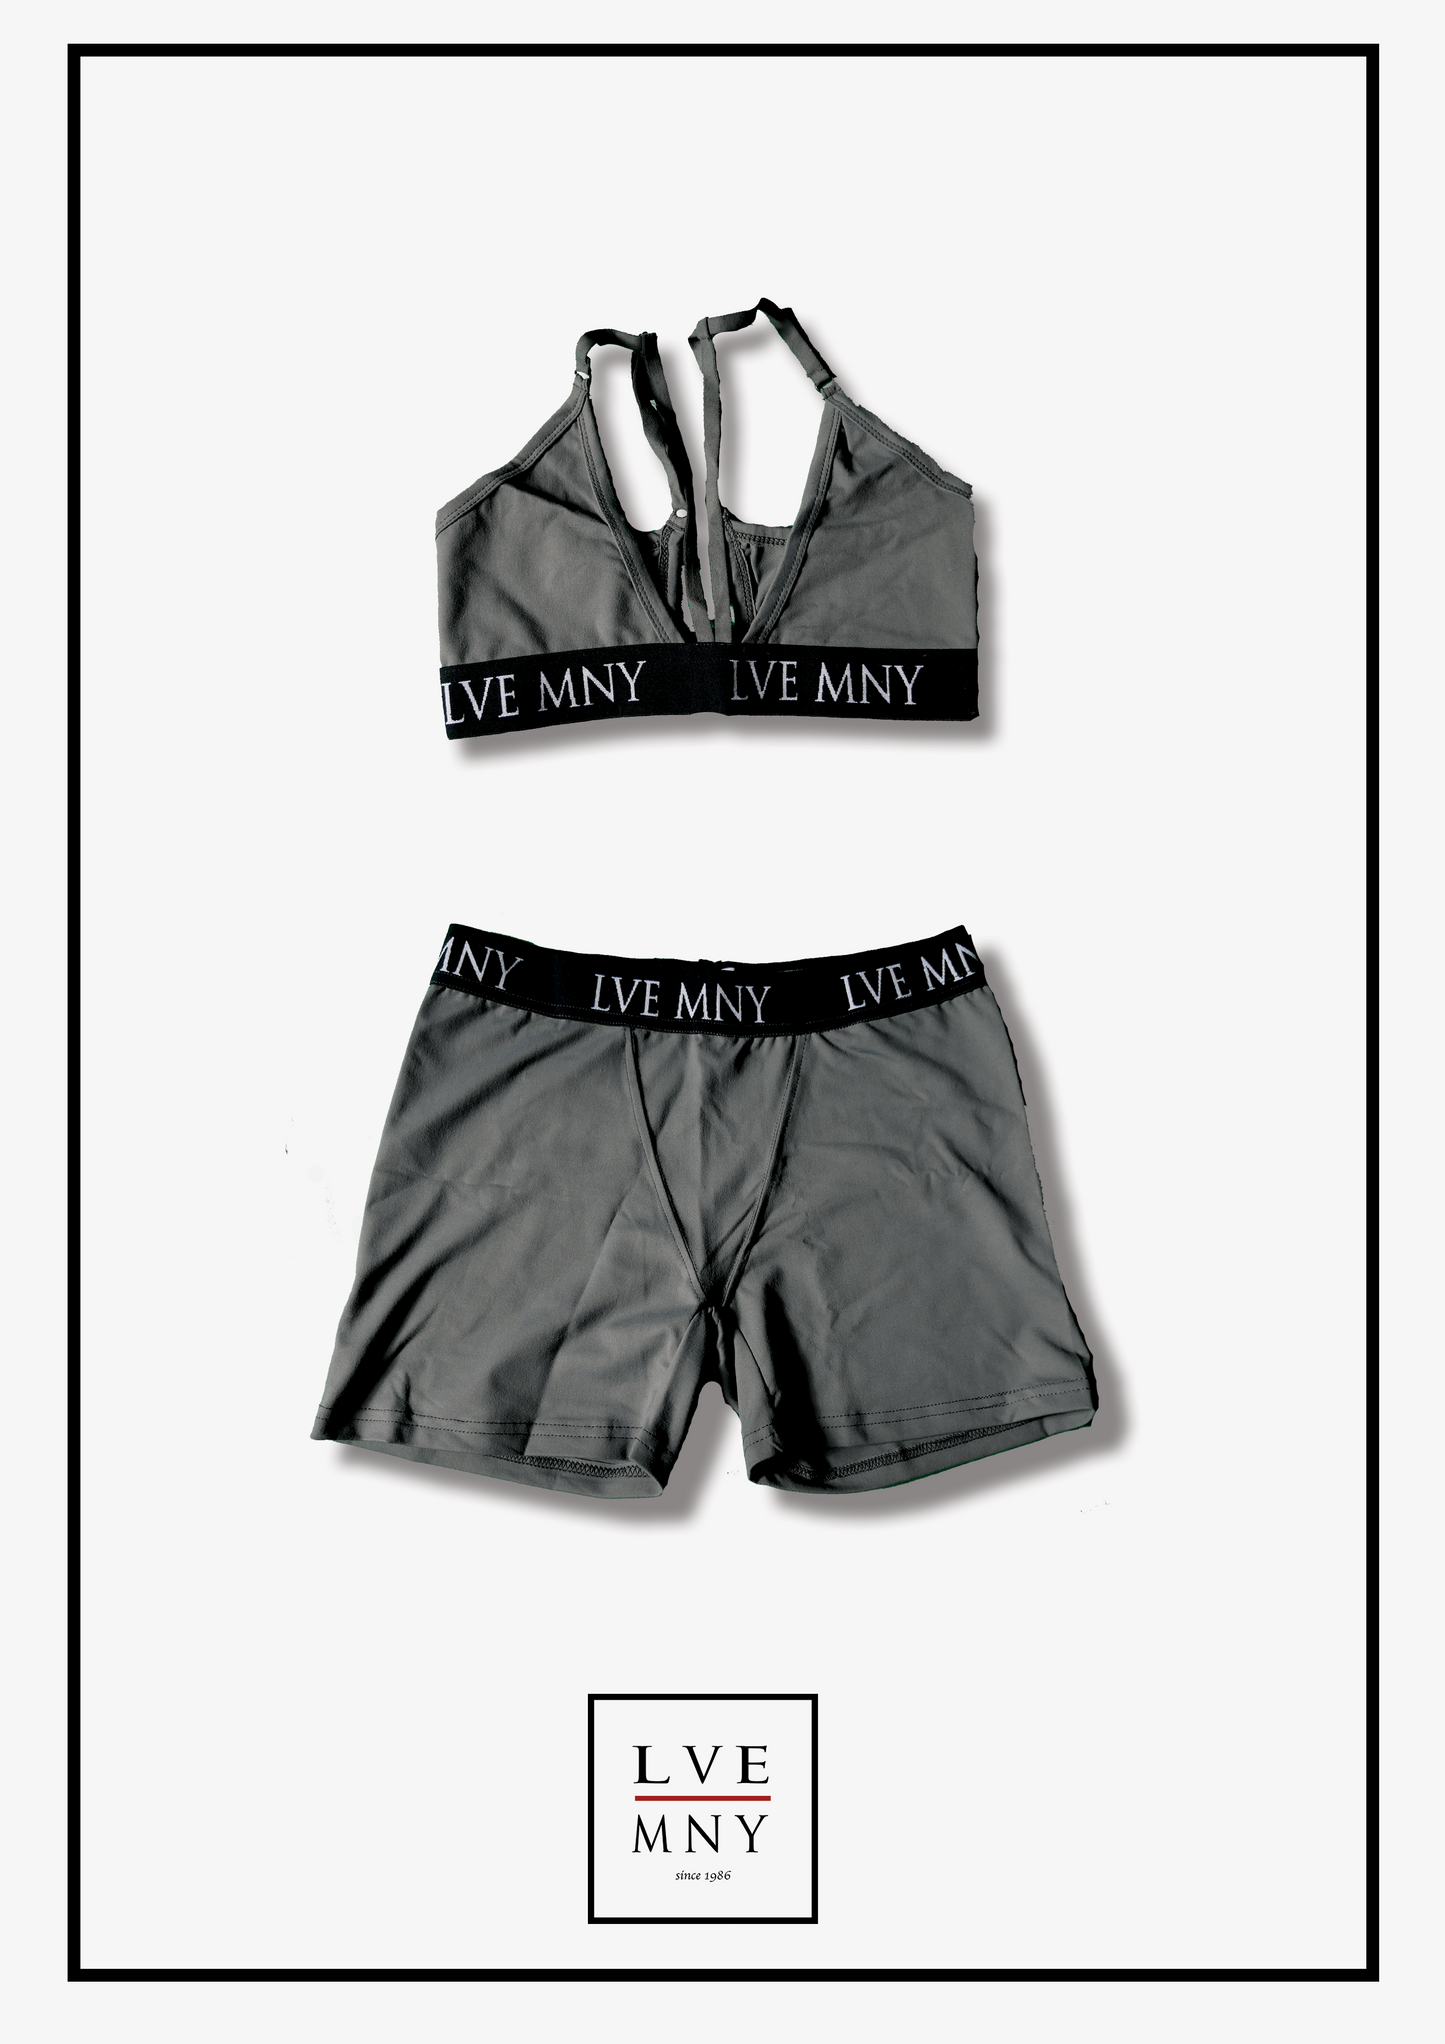 LVE MNY 2pc sports bra underwear set